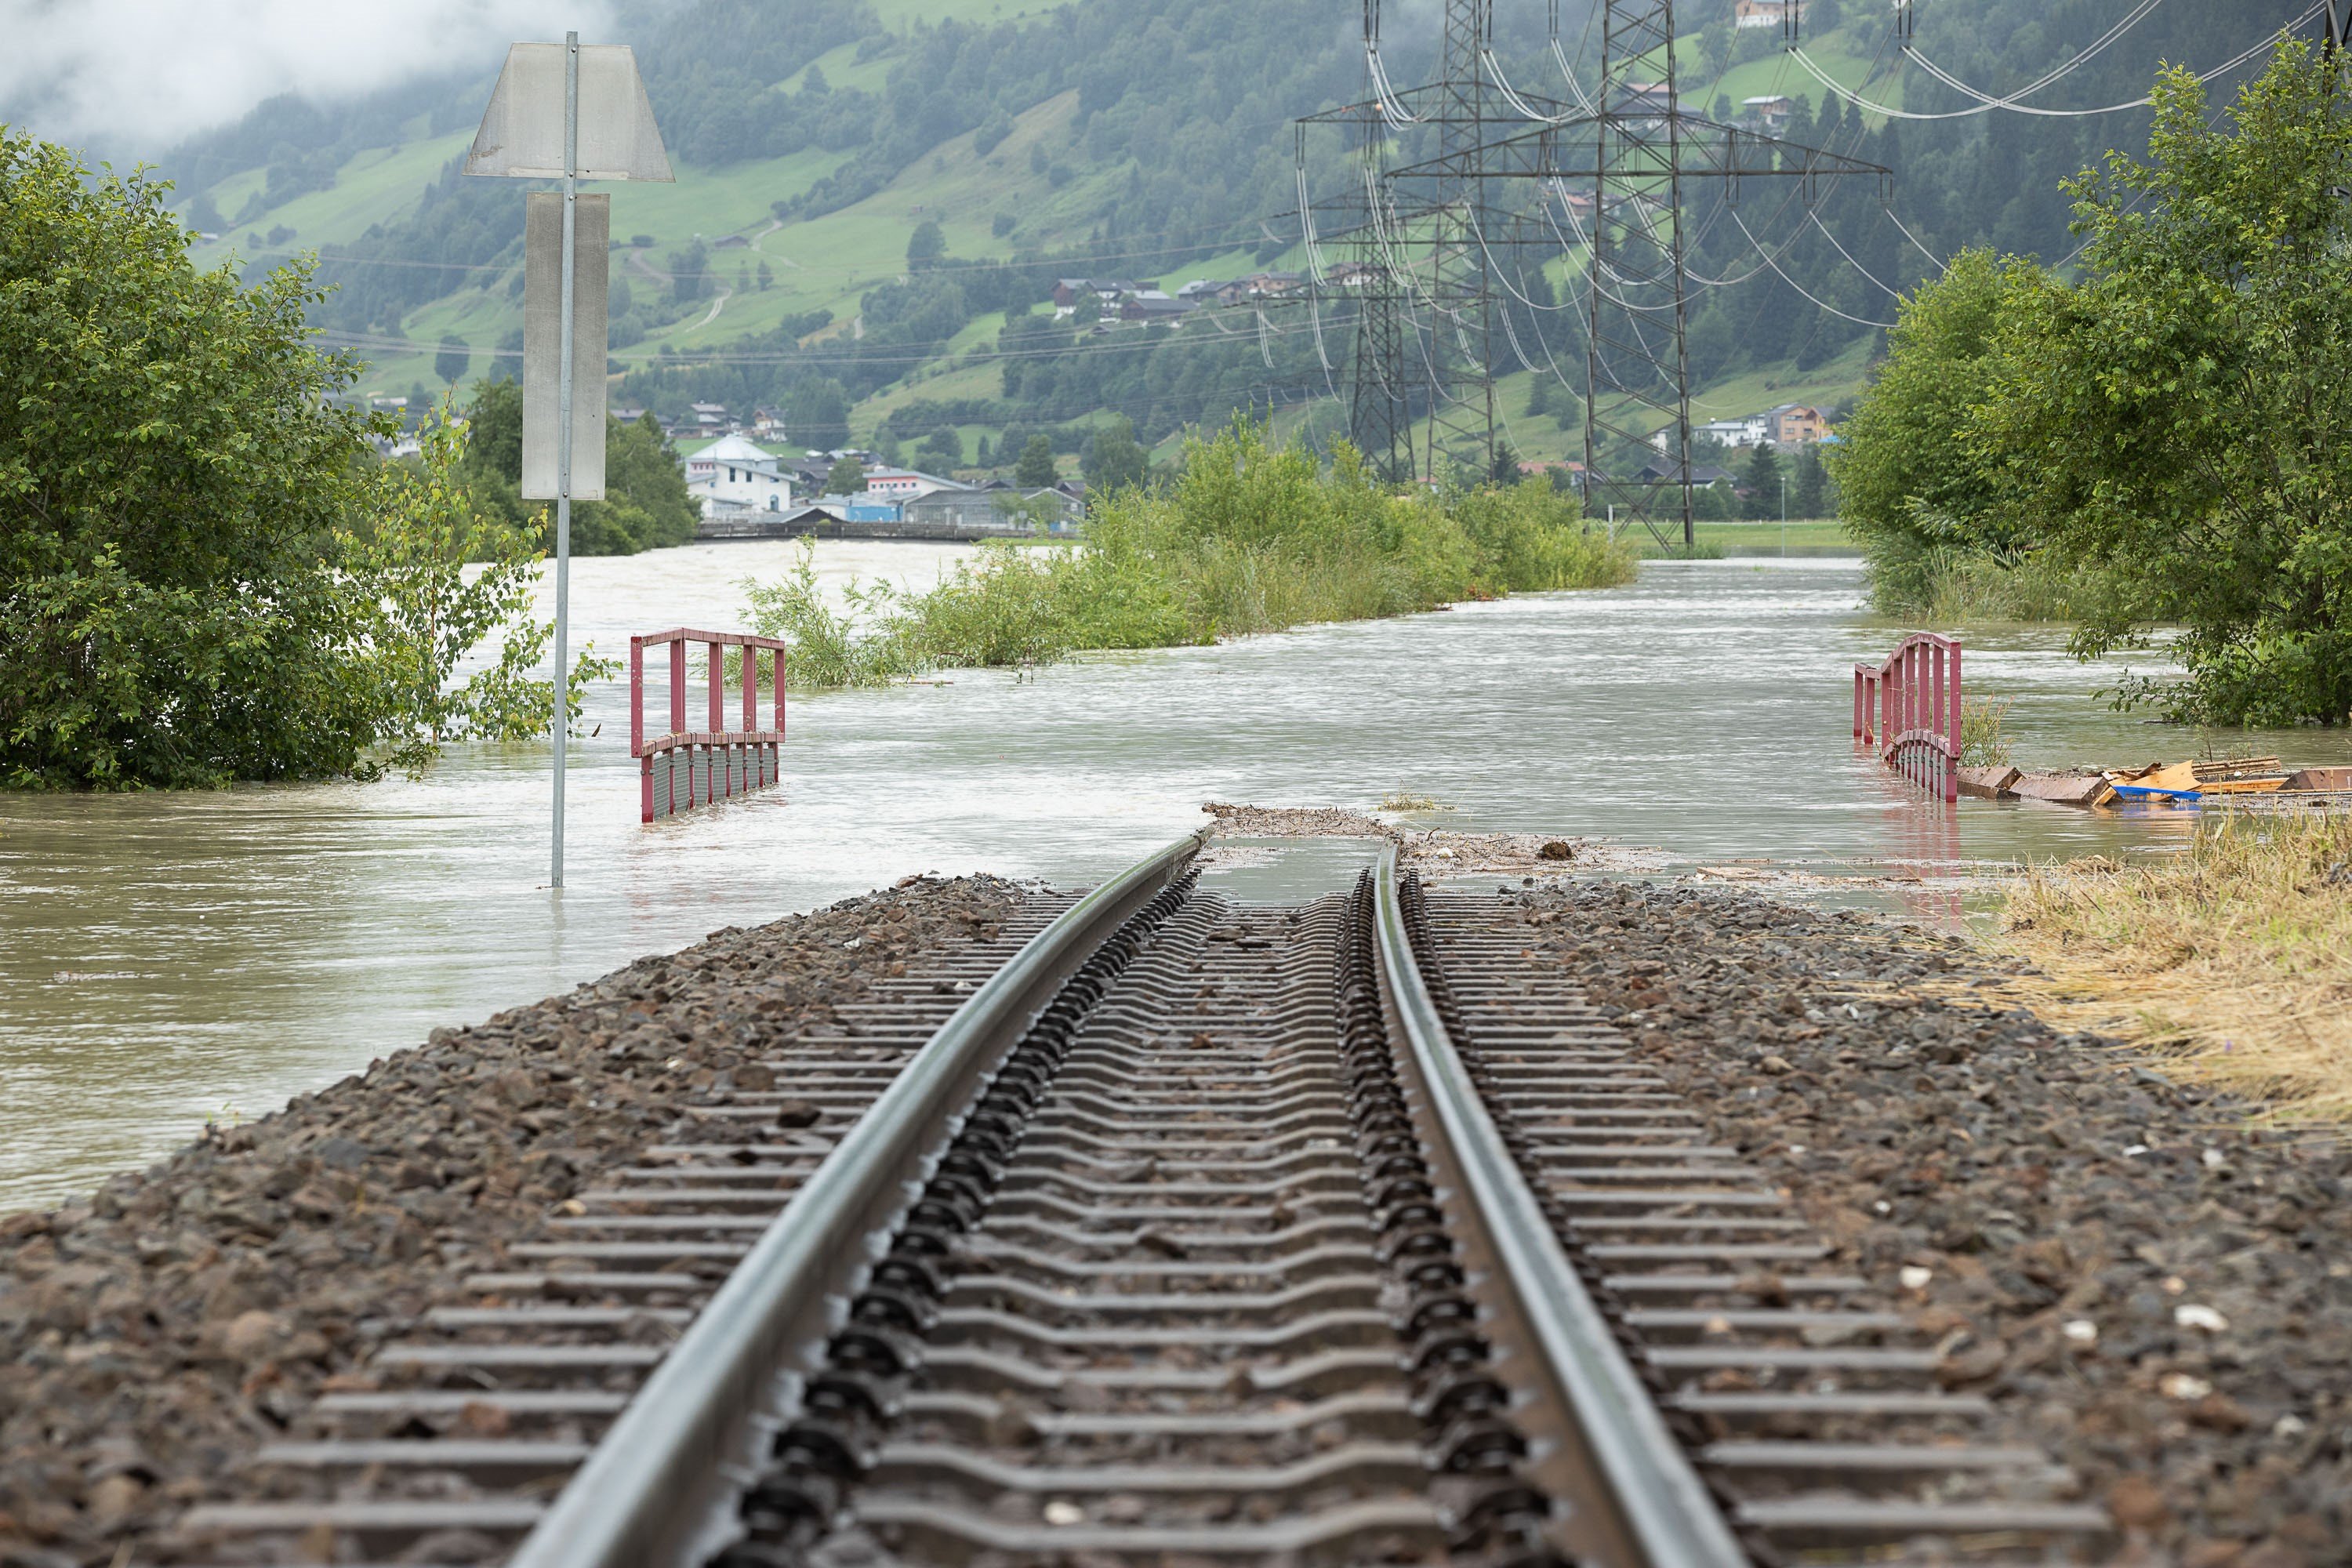 vía del tren inundada miedo lluvias austria / Europa Press